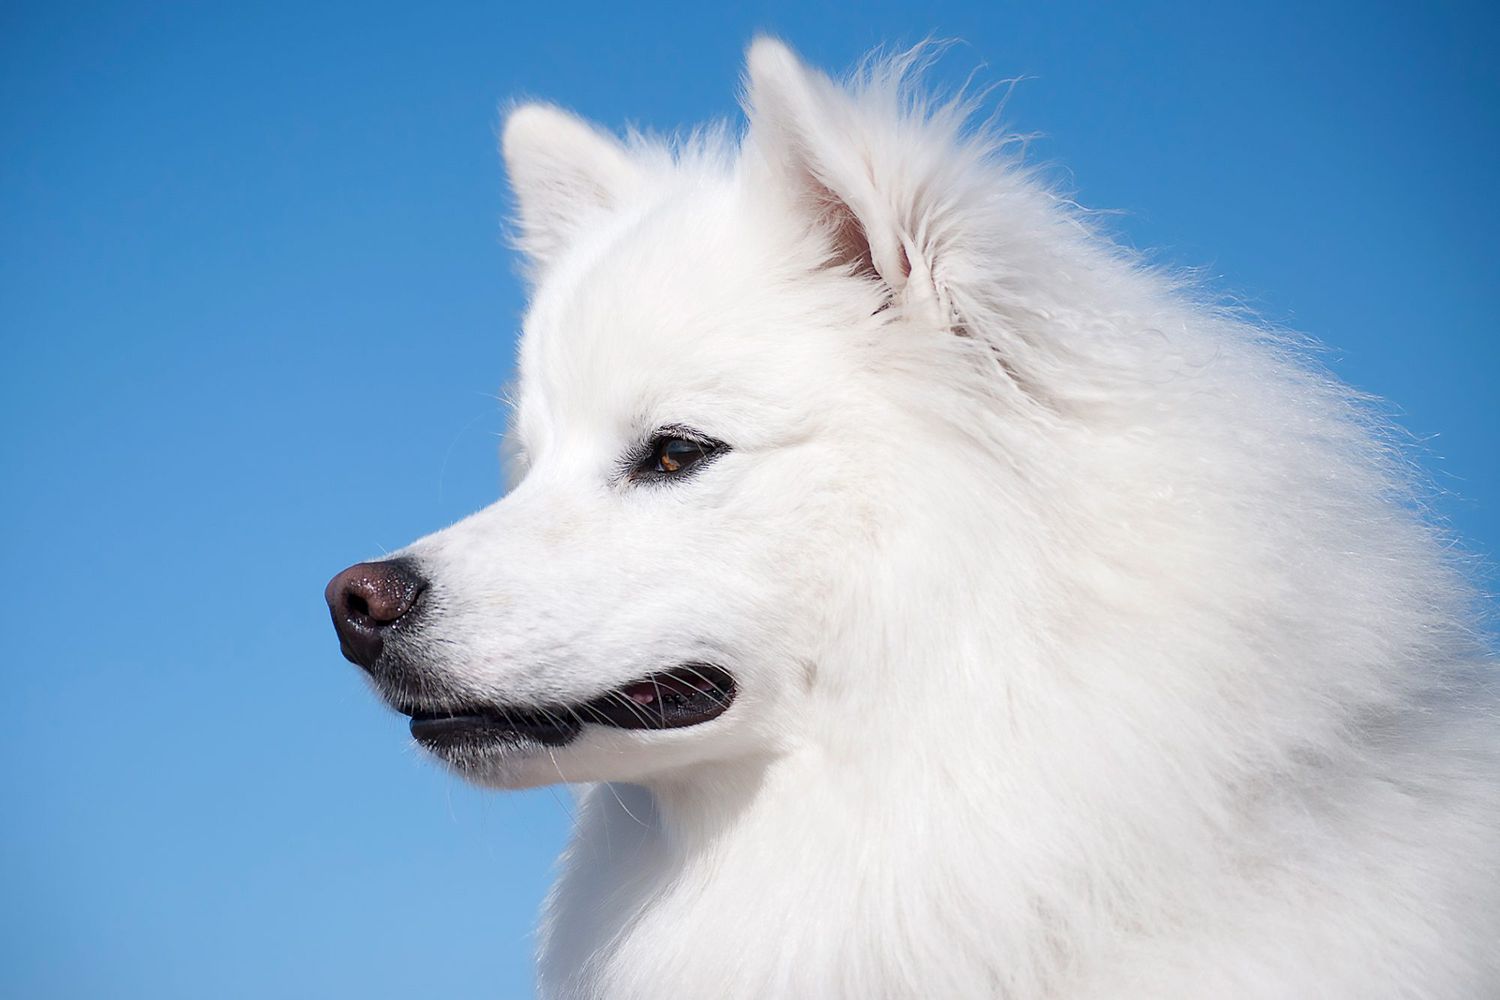 american eskimo dog profile against a blue sky